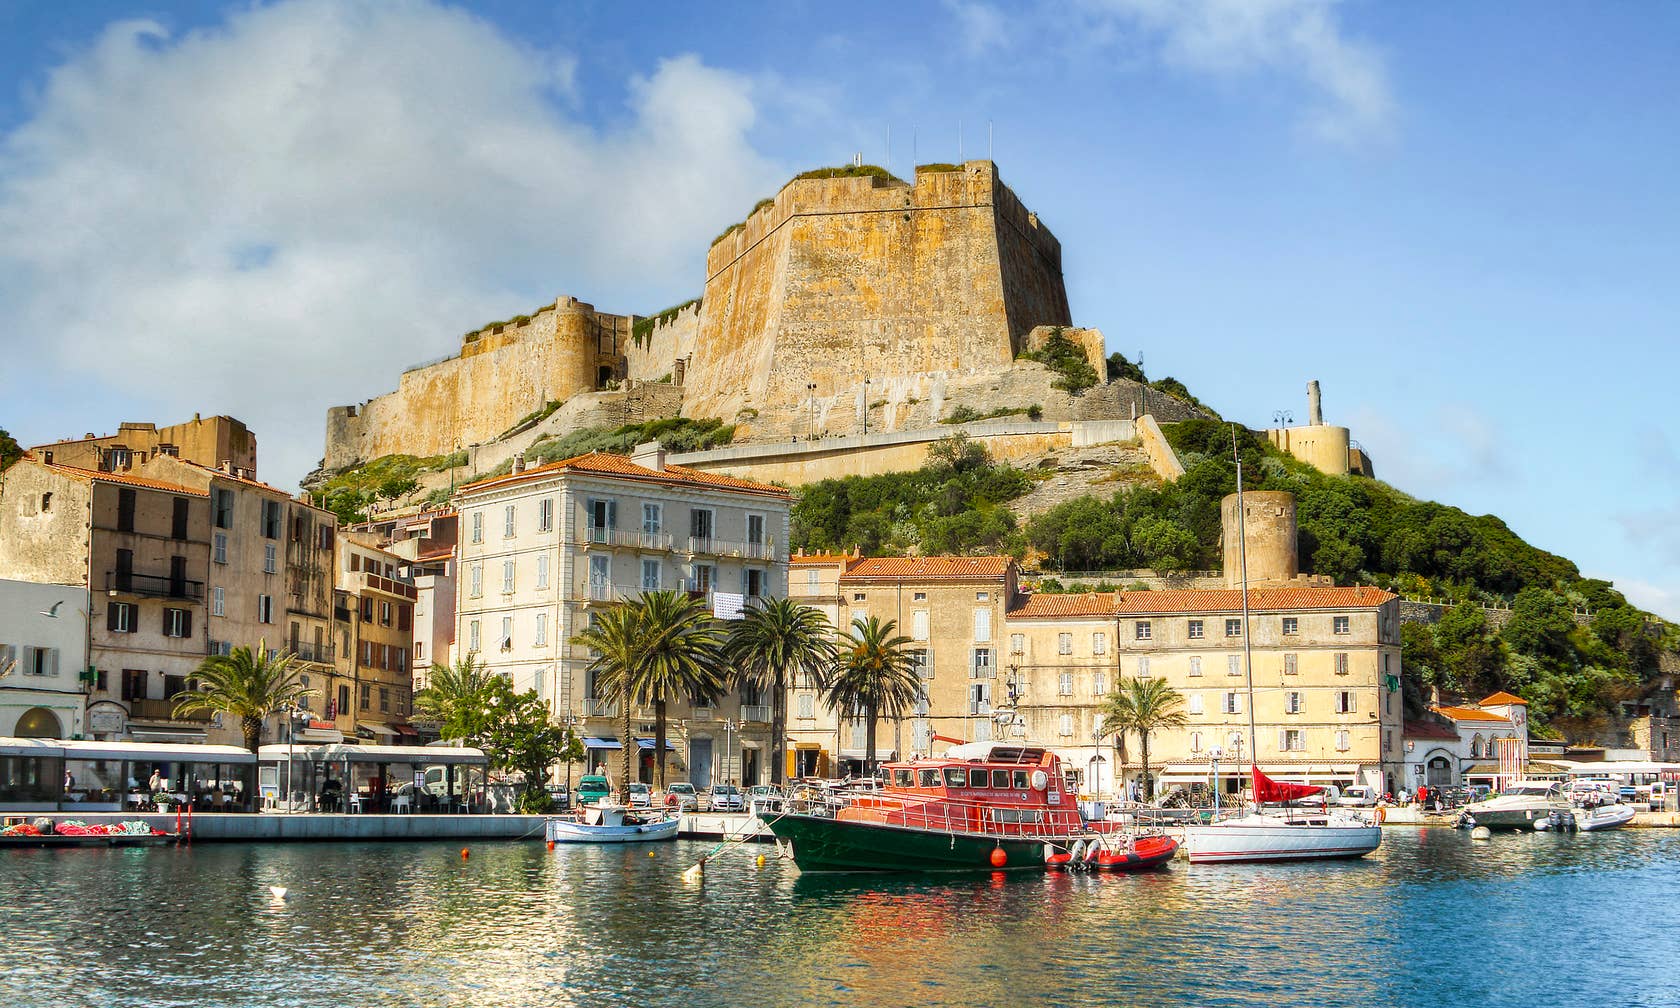 Sewa tempat di Corsica